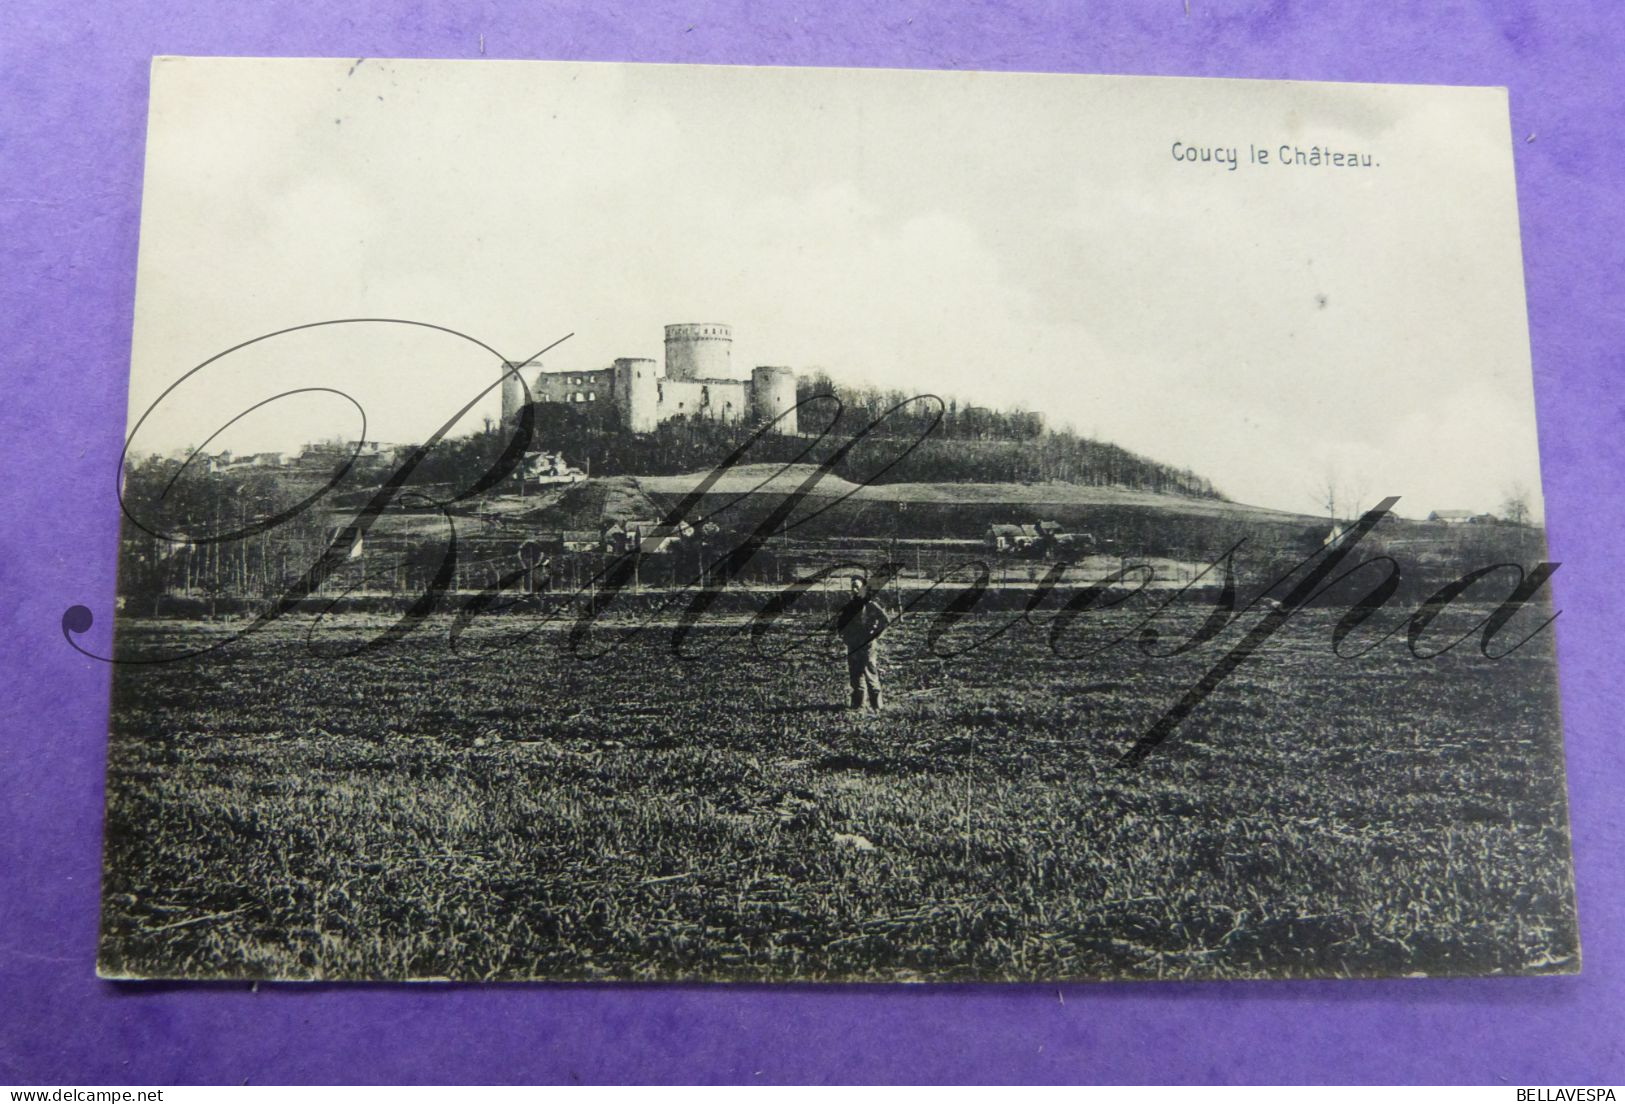 Coucy Chateau Feldpost Pulvermacher  Thüringen  France 1915  1914-18 -15 Inf. 8e REG. 4 Kompanie  15 Infanterie Division - Oorlog 1914-18